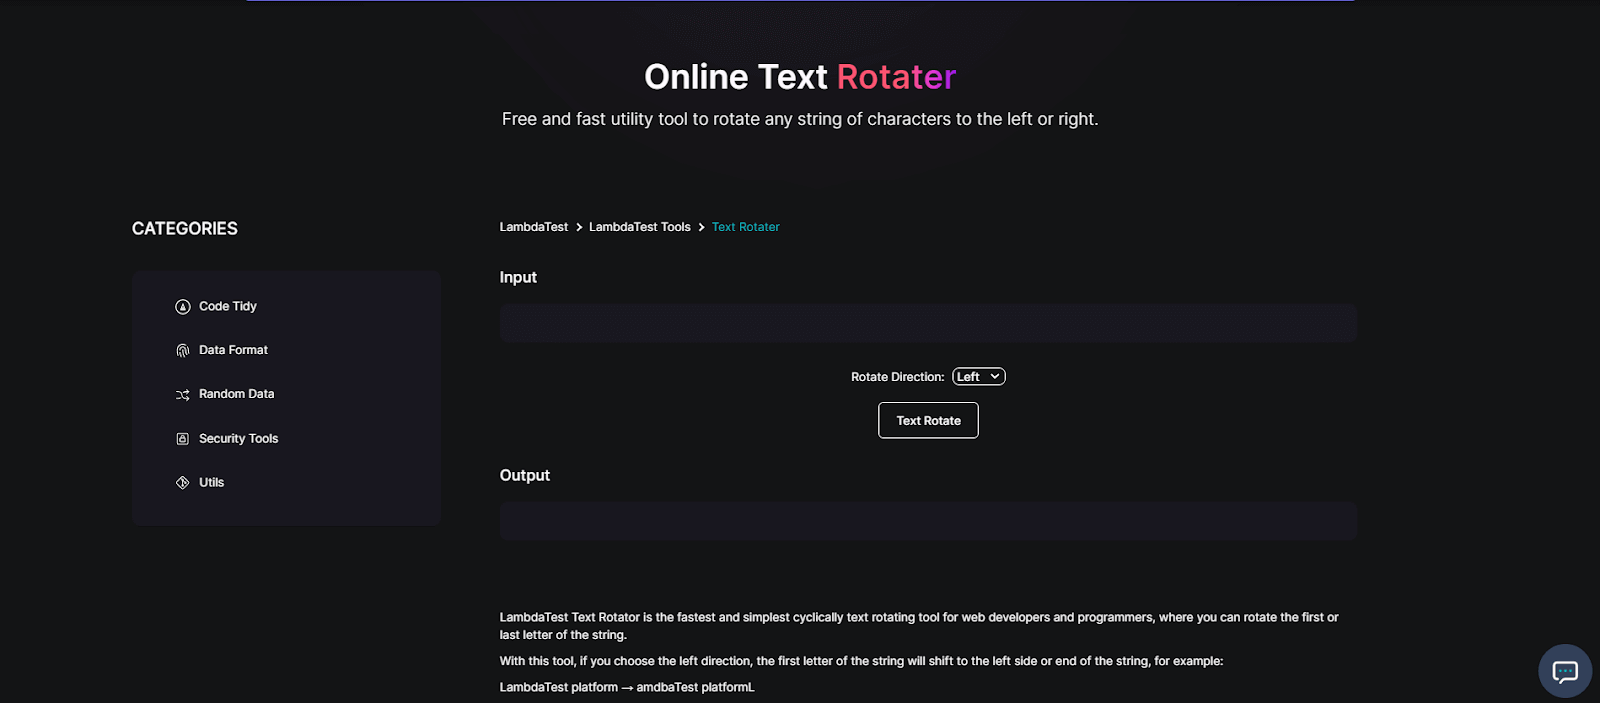 Online Text Rotator